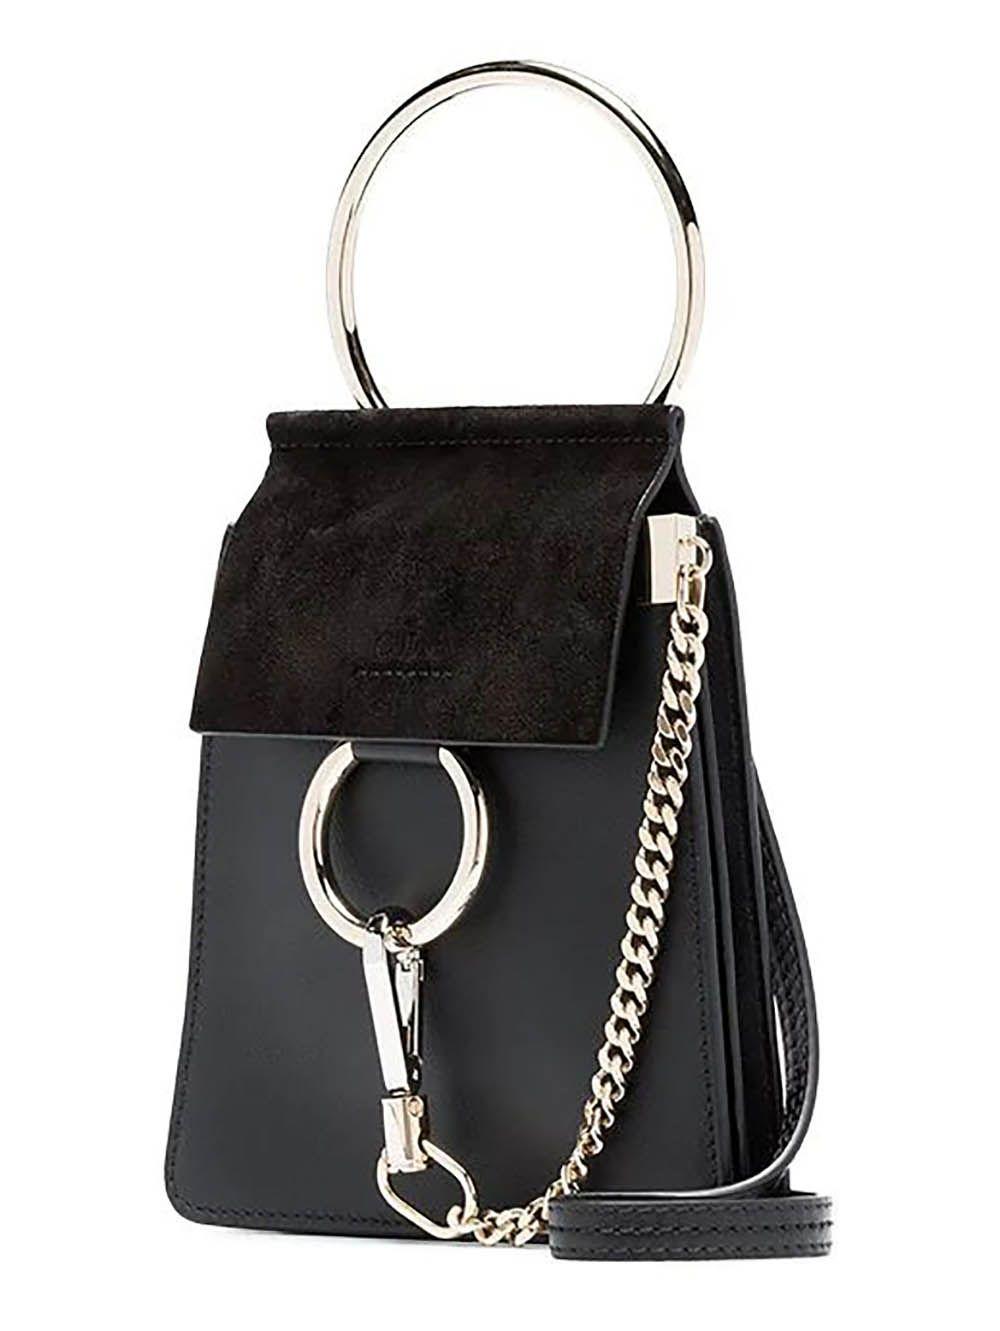 (PlsContactB4OfferBuy) Chloe Faye Small Bracelet Bag PINK